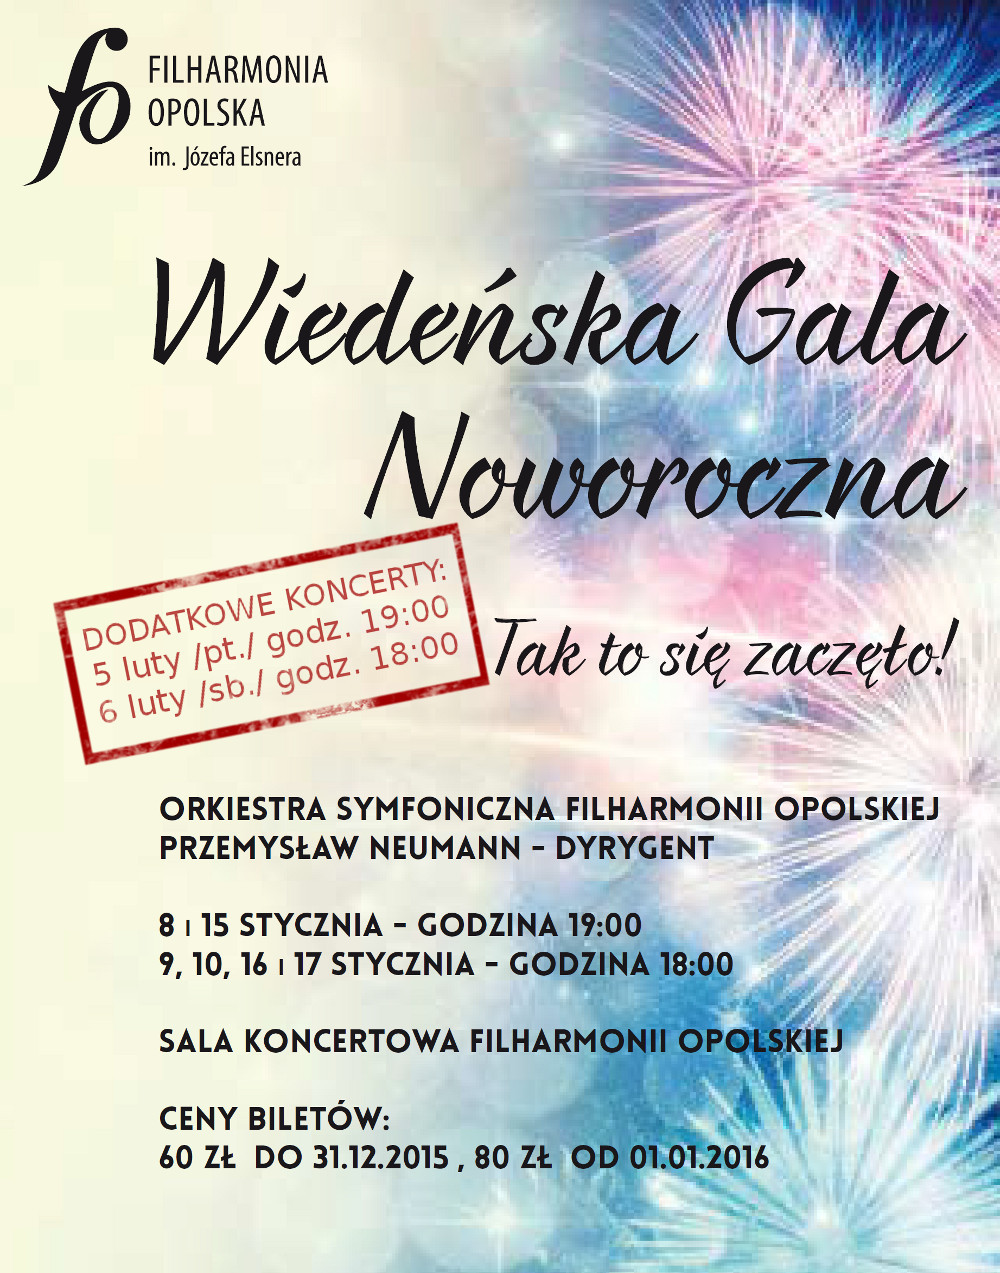 http://www.filharmonia.opole.pl/images/sezon2015-16/2016_gale_noworoczne_dod.jpg